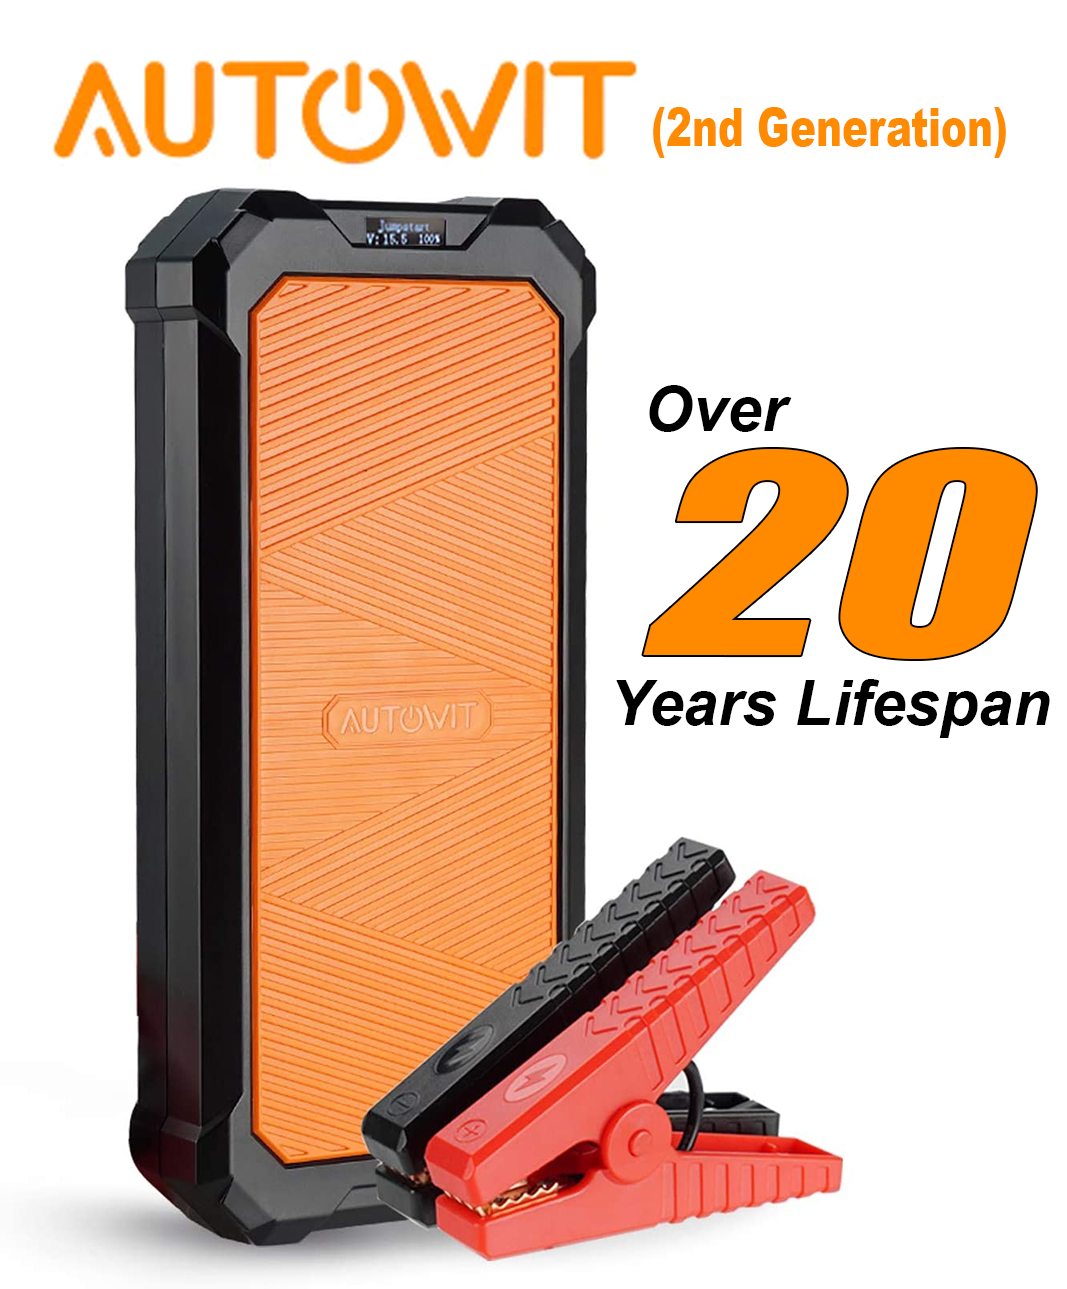 Autowit SuperCap 2 Battery-Less Portable Car Battery Jump Starter (2nd Generation)